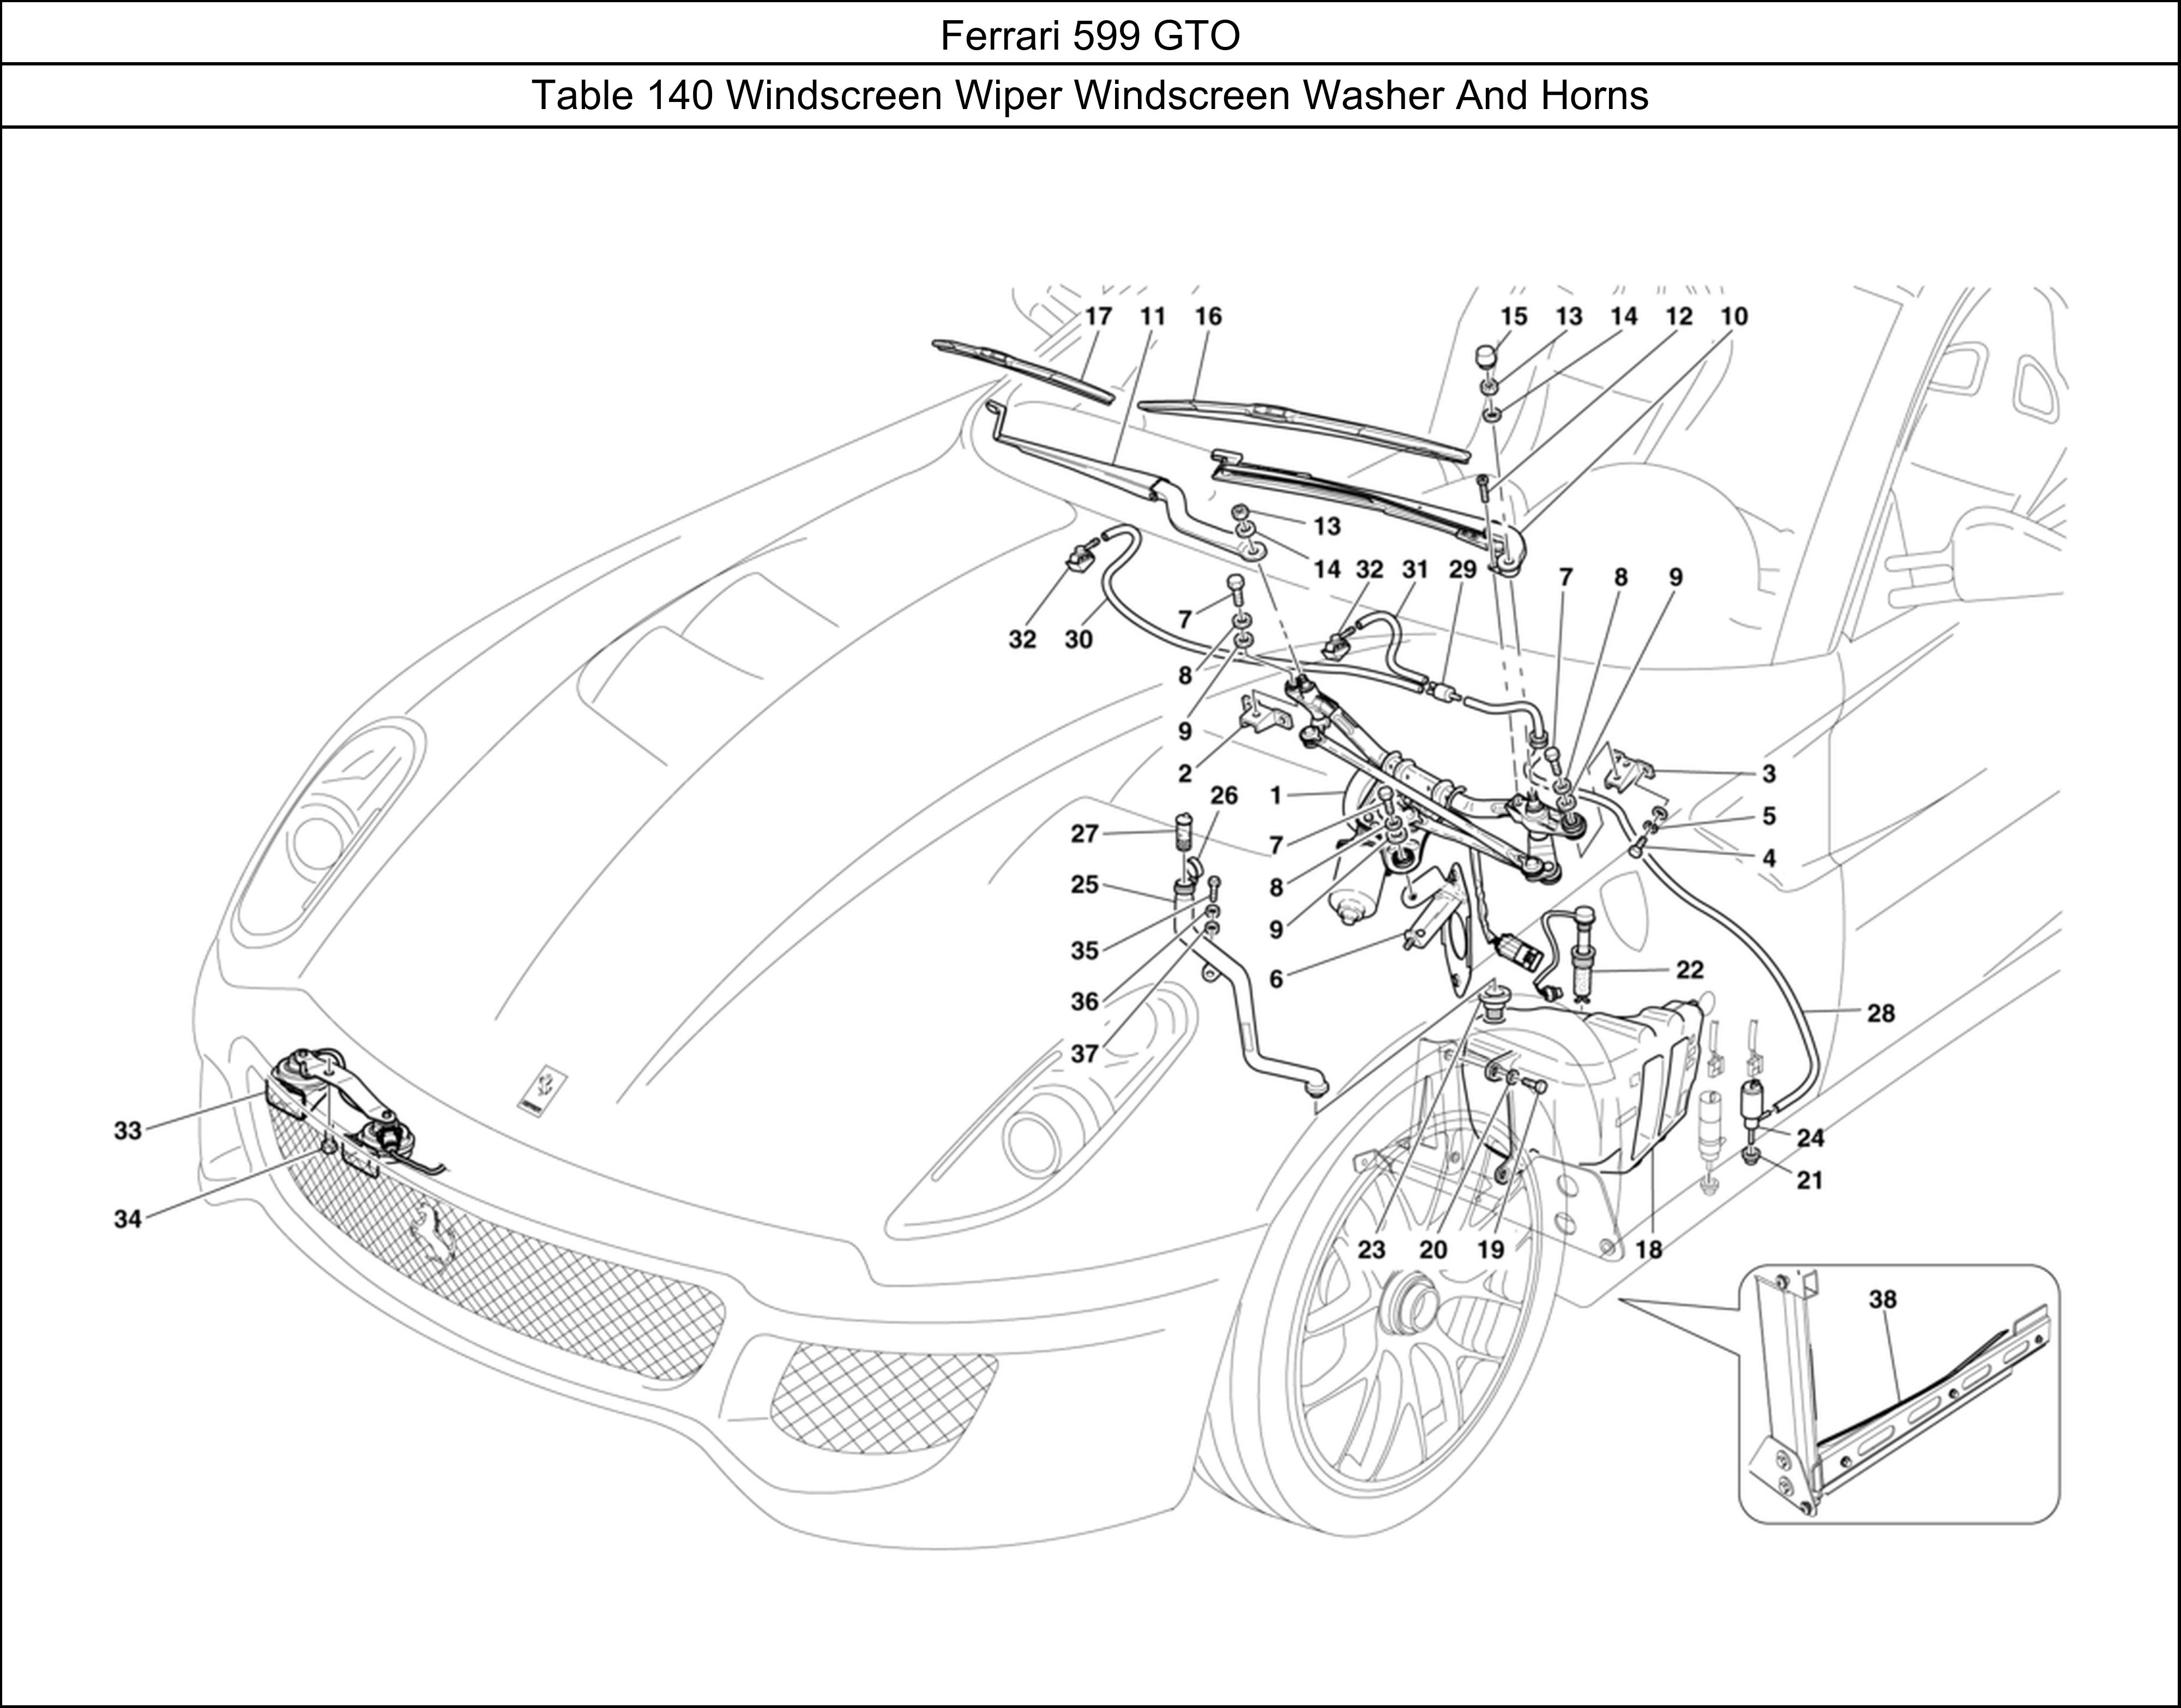 Ferrari Parts Ferrari 599 GTO Table 140 Windscreen Wiper Windscreen Washer And Horns